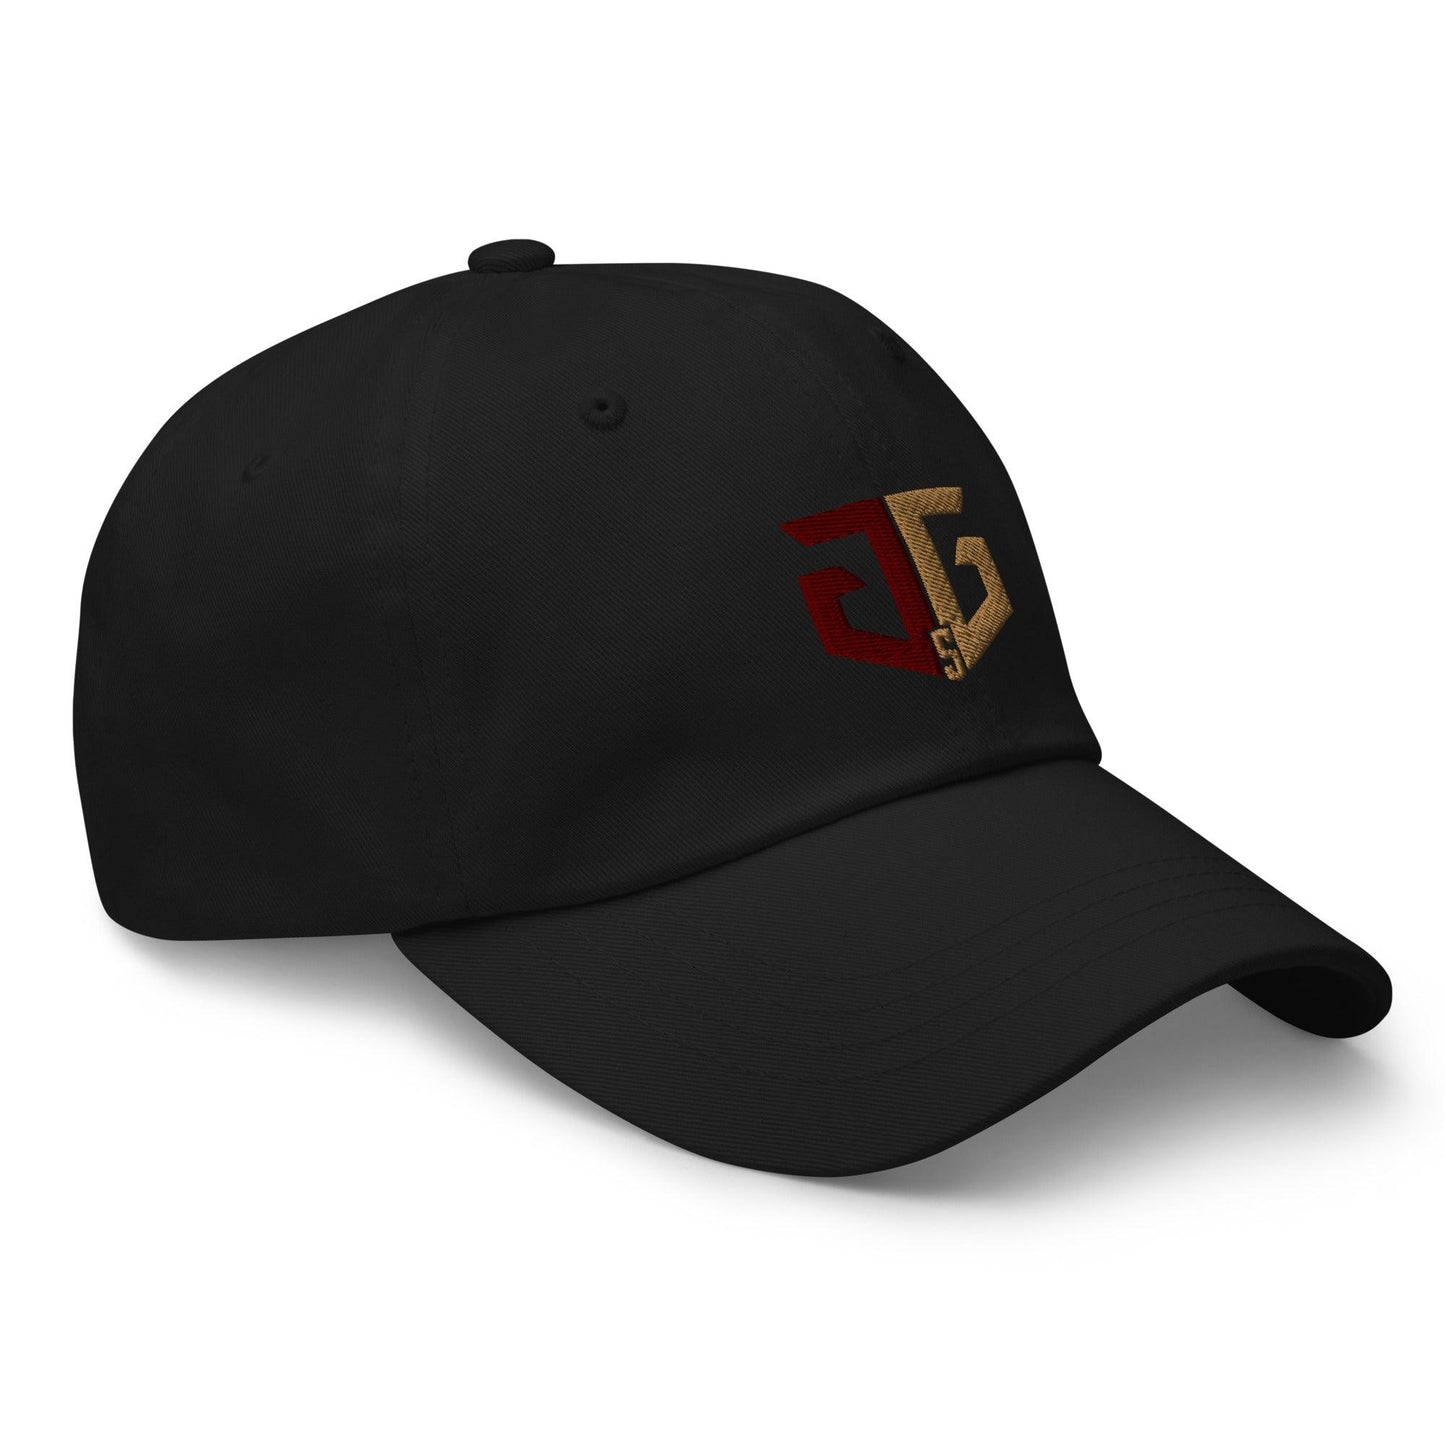 Jeff Garcia "Signature" hat - Fan Arch